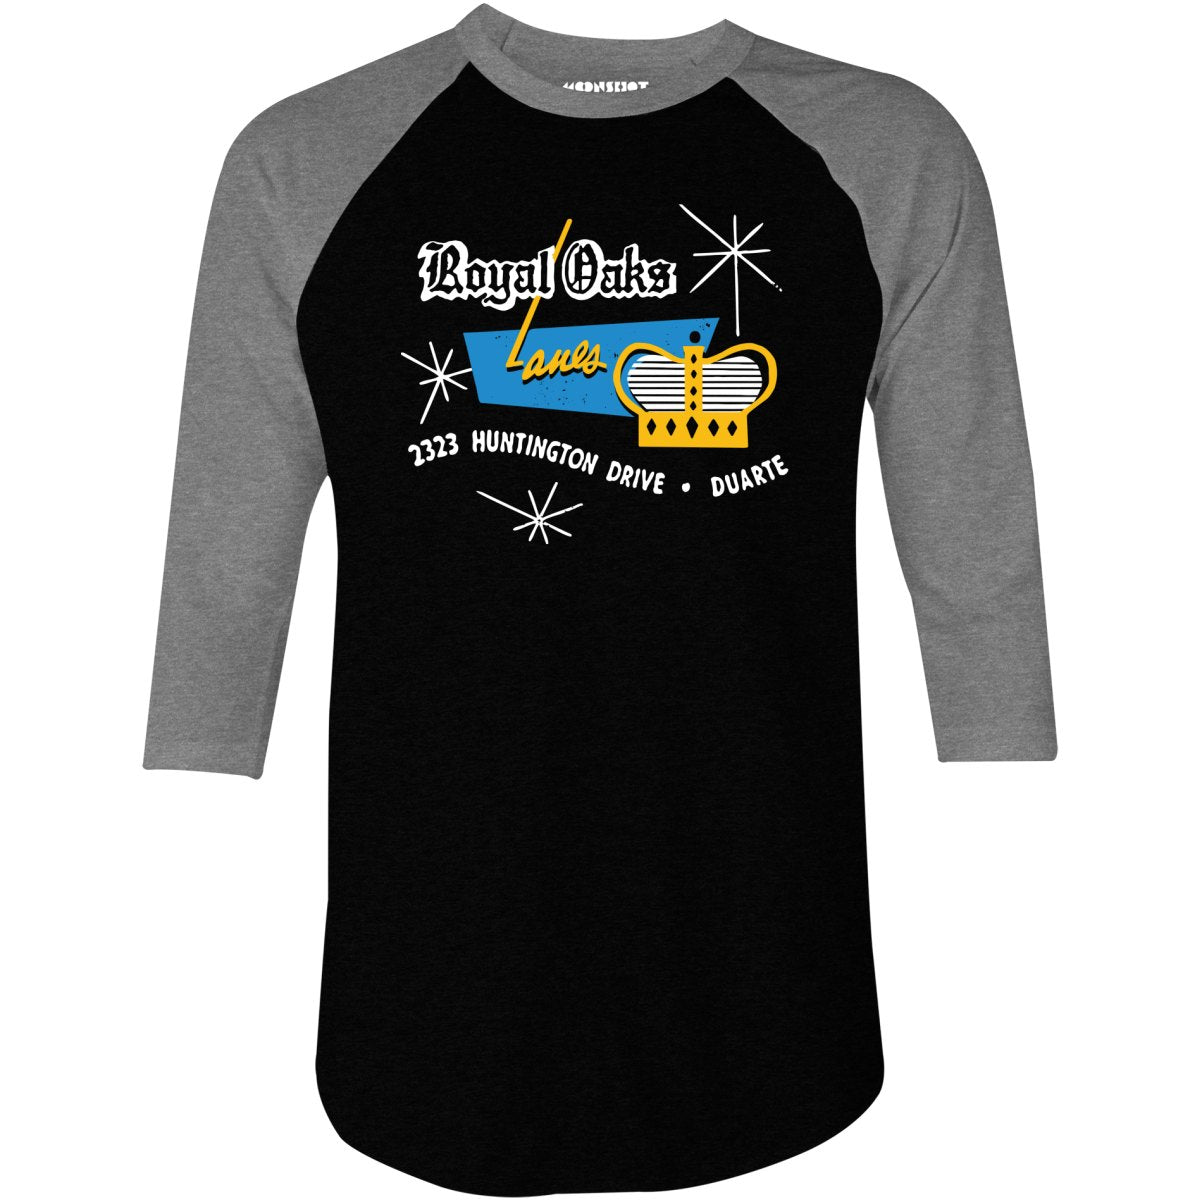 Royal Oaks Lanes - Duarte, CA - Vintage Bowling Alley - 3/4 Sleeve Raglan T-Shirt